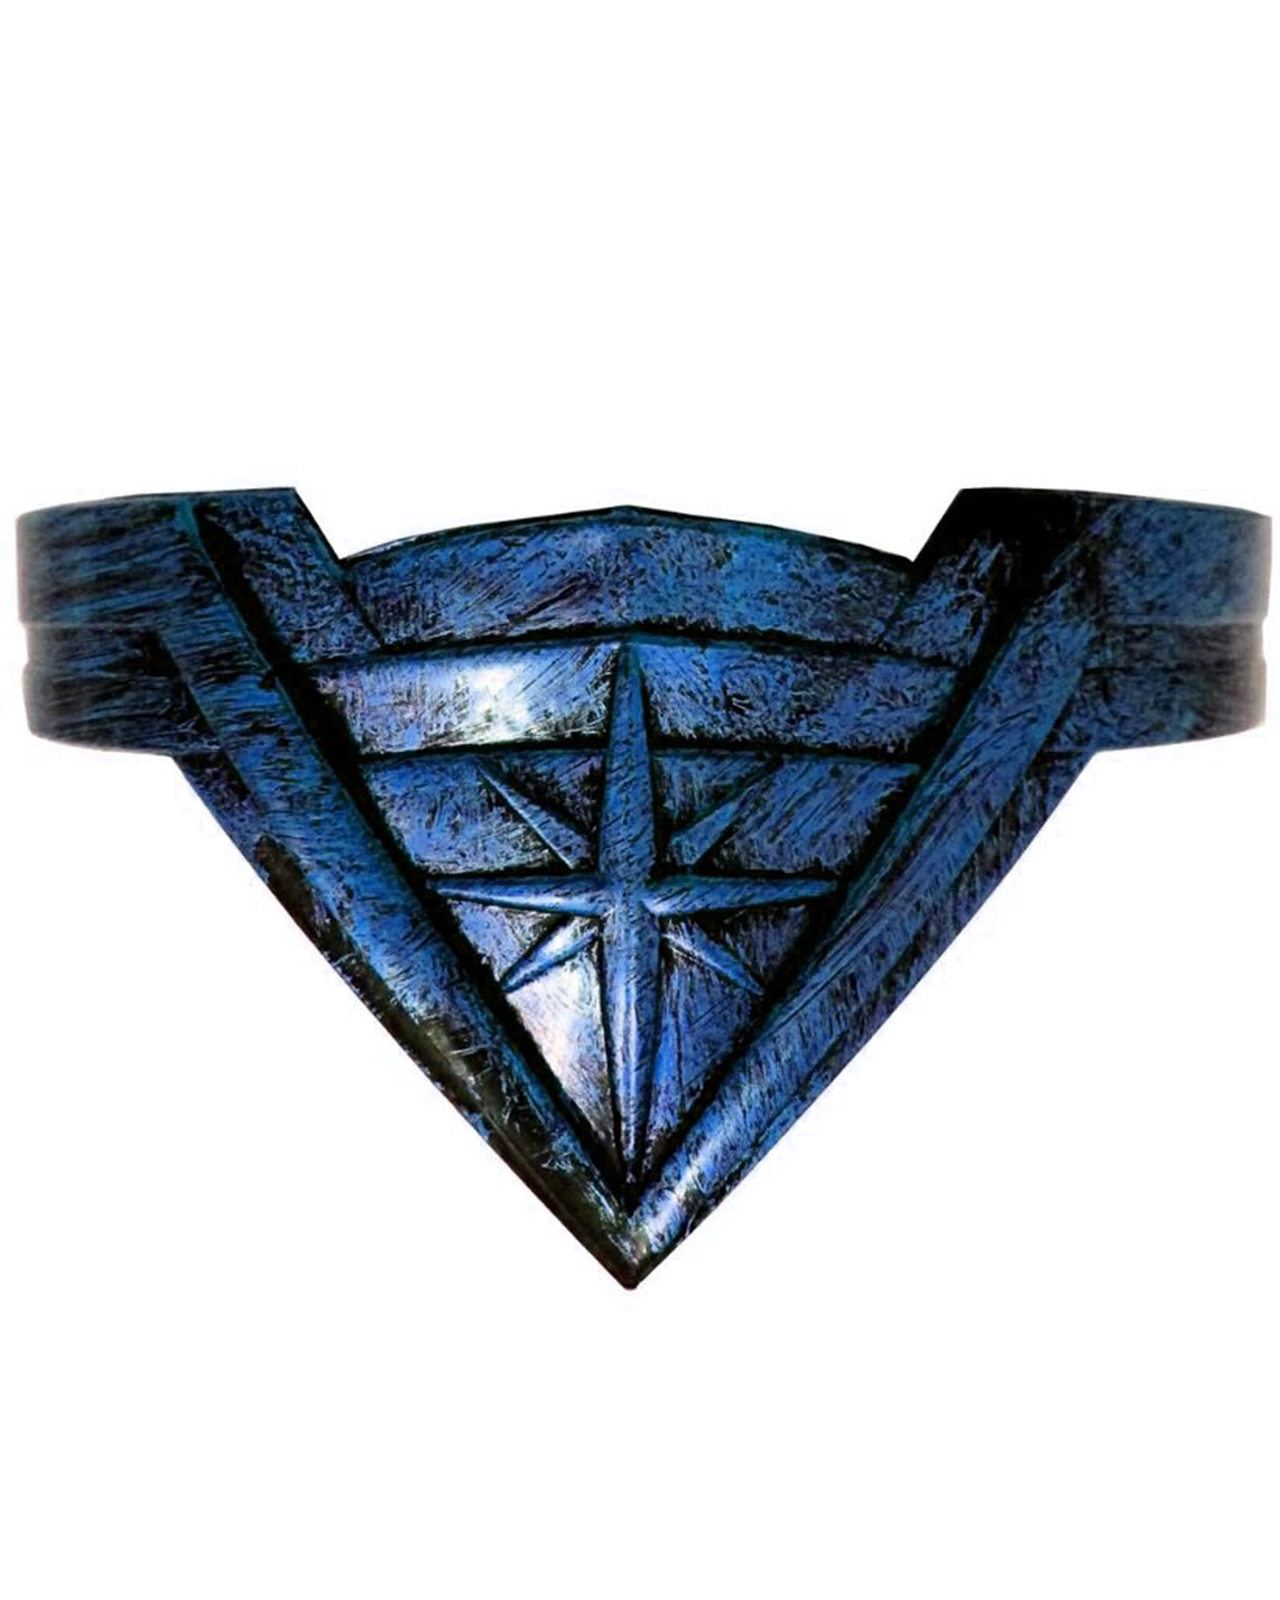 Blue Wonder Woman Headpiece